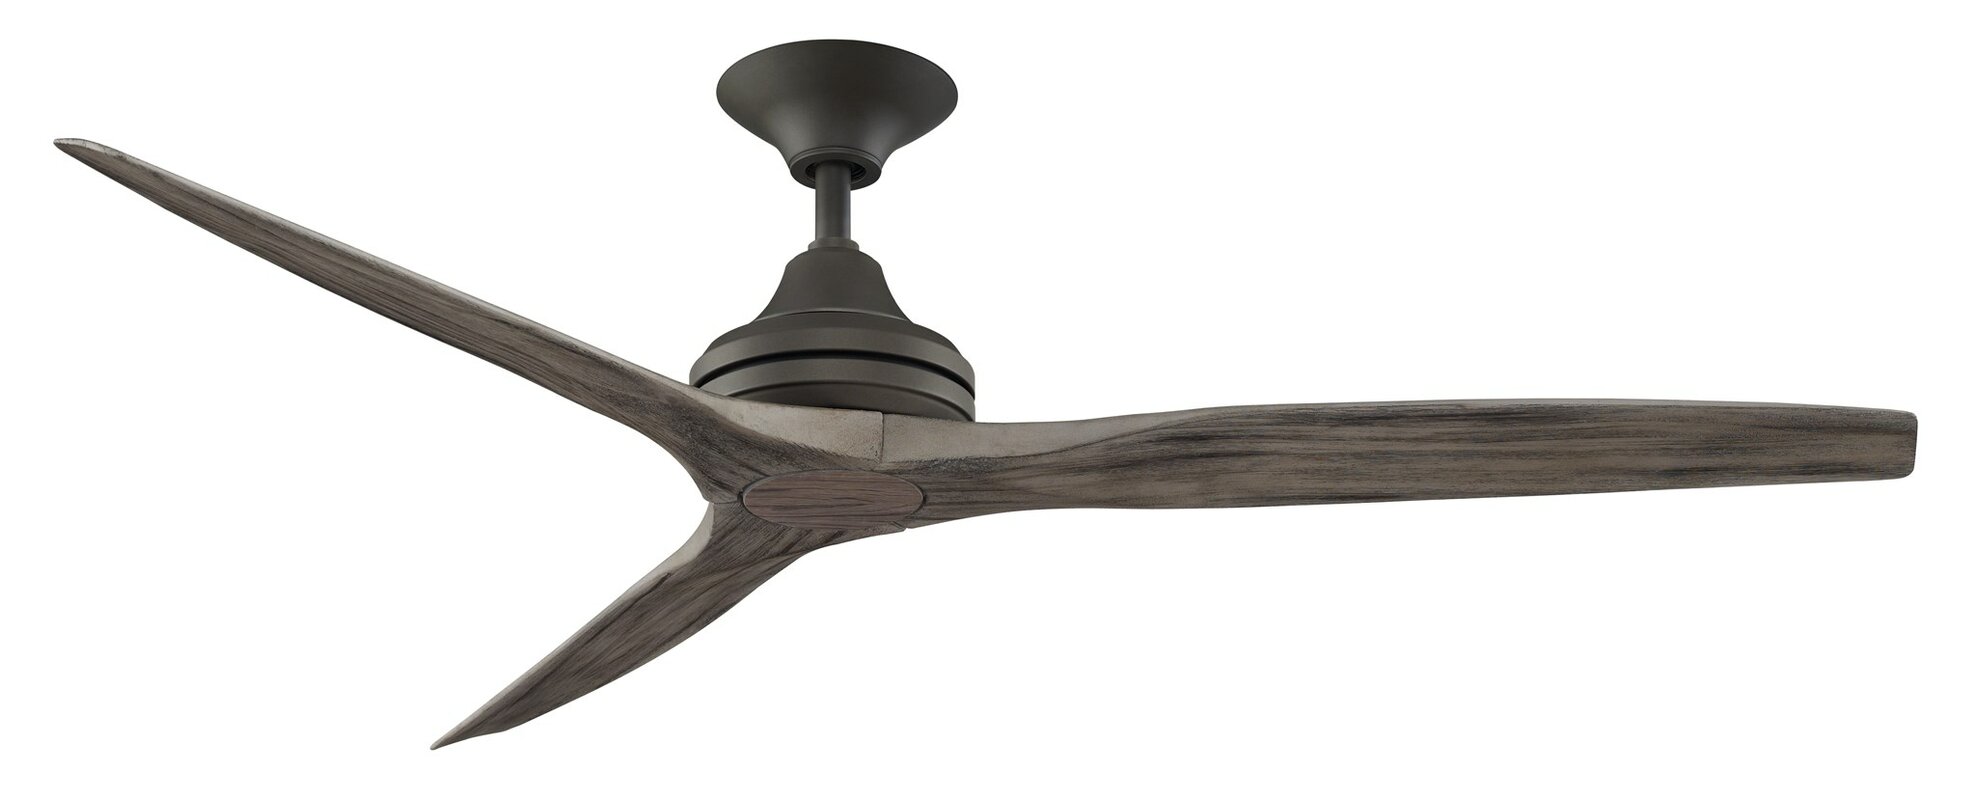 60" Spitfire 3 Blade Ceiling Fan Motor. #ceilingfans #modernstyle #interiordesign